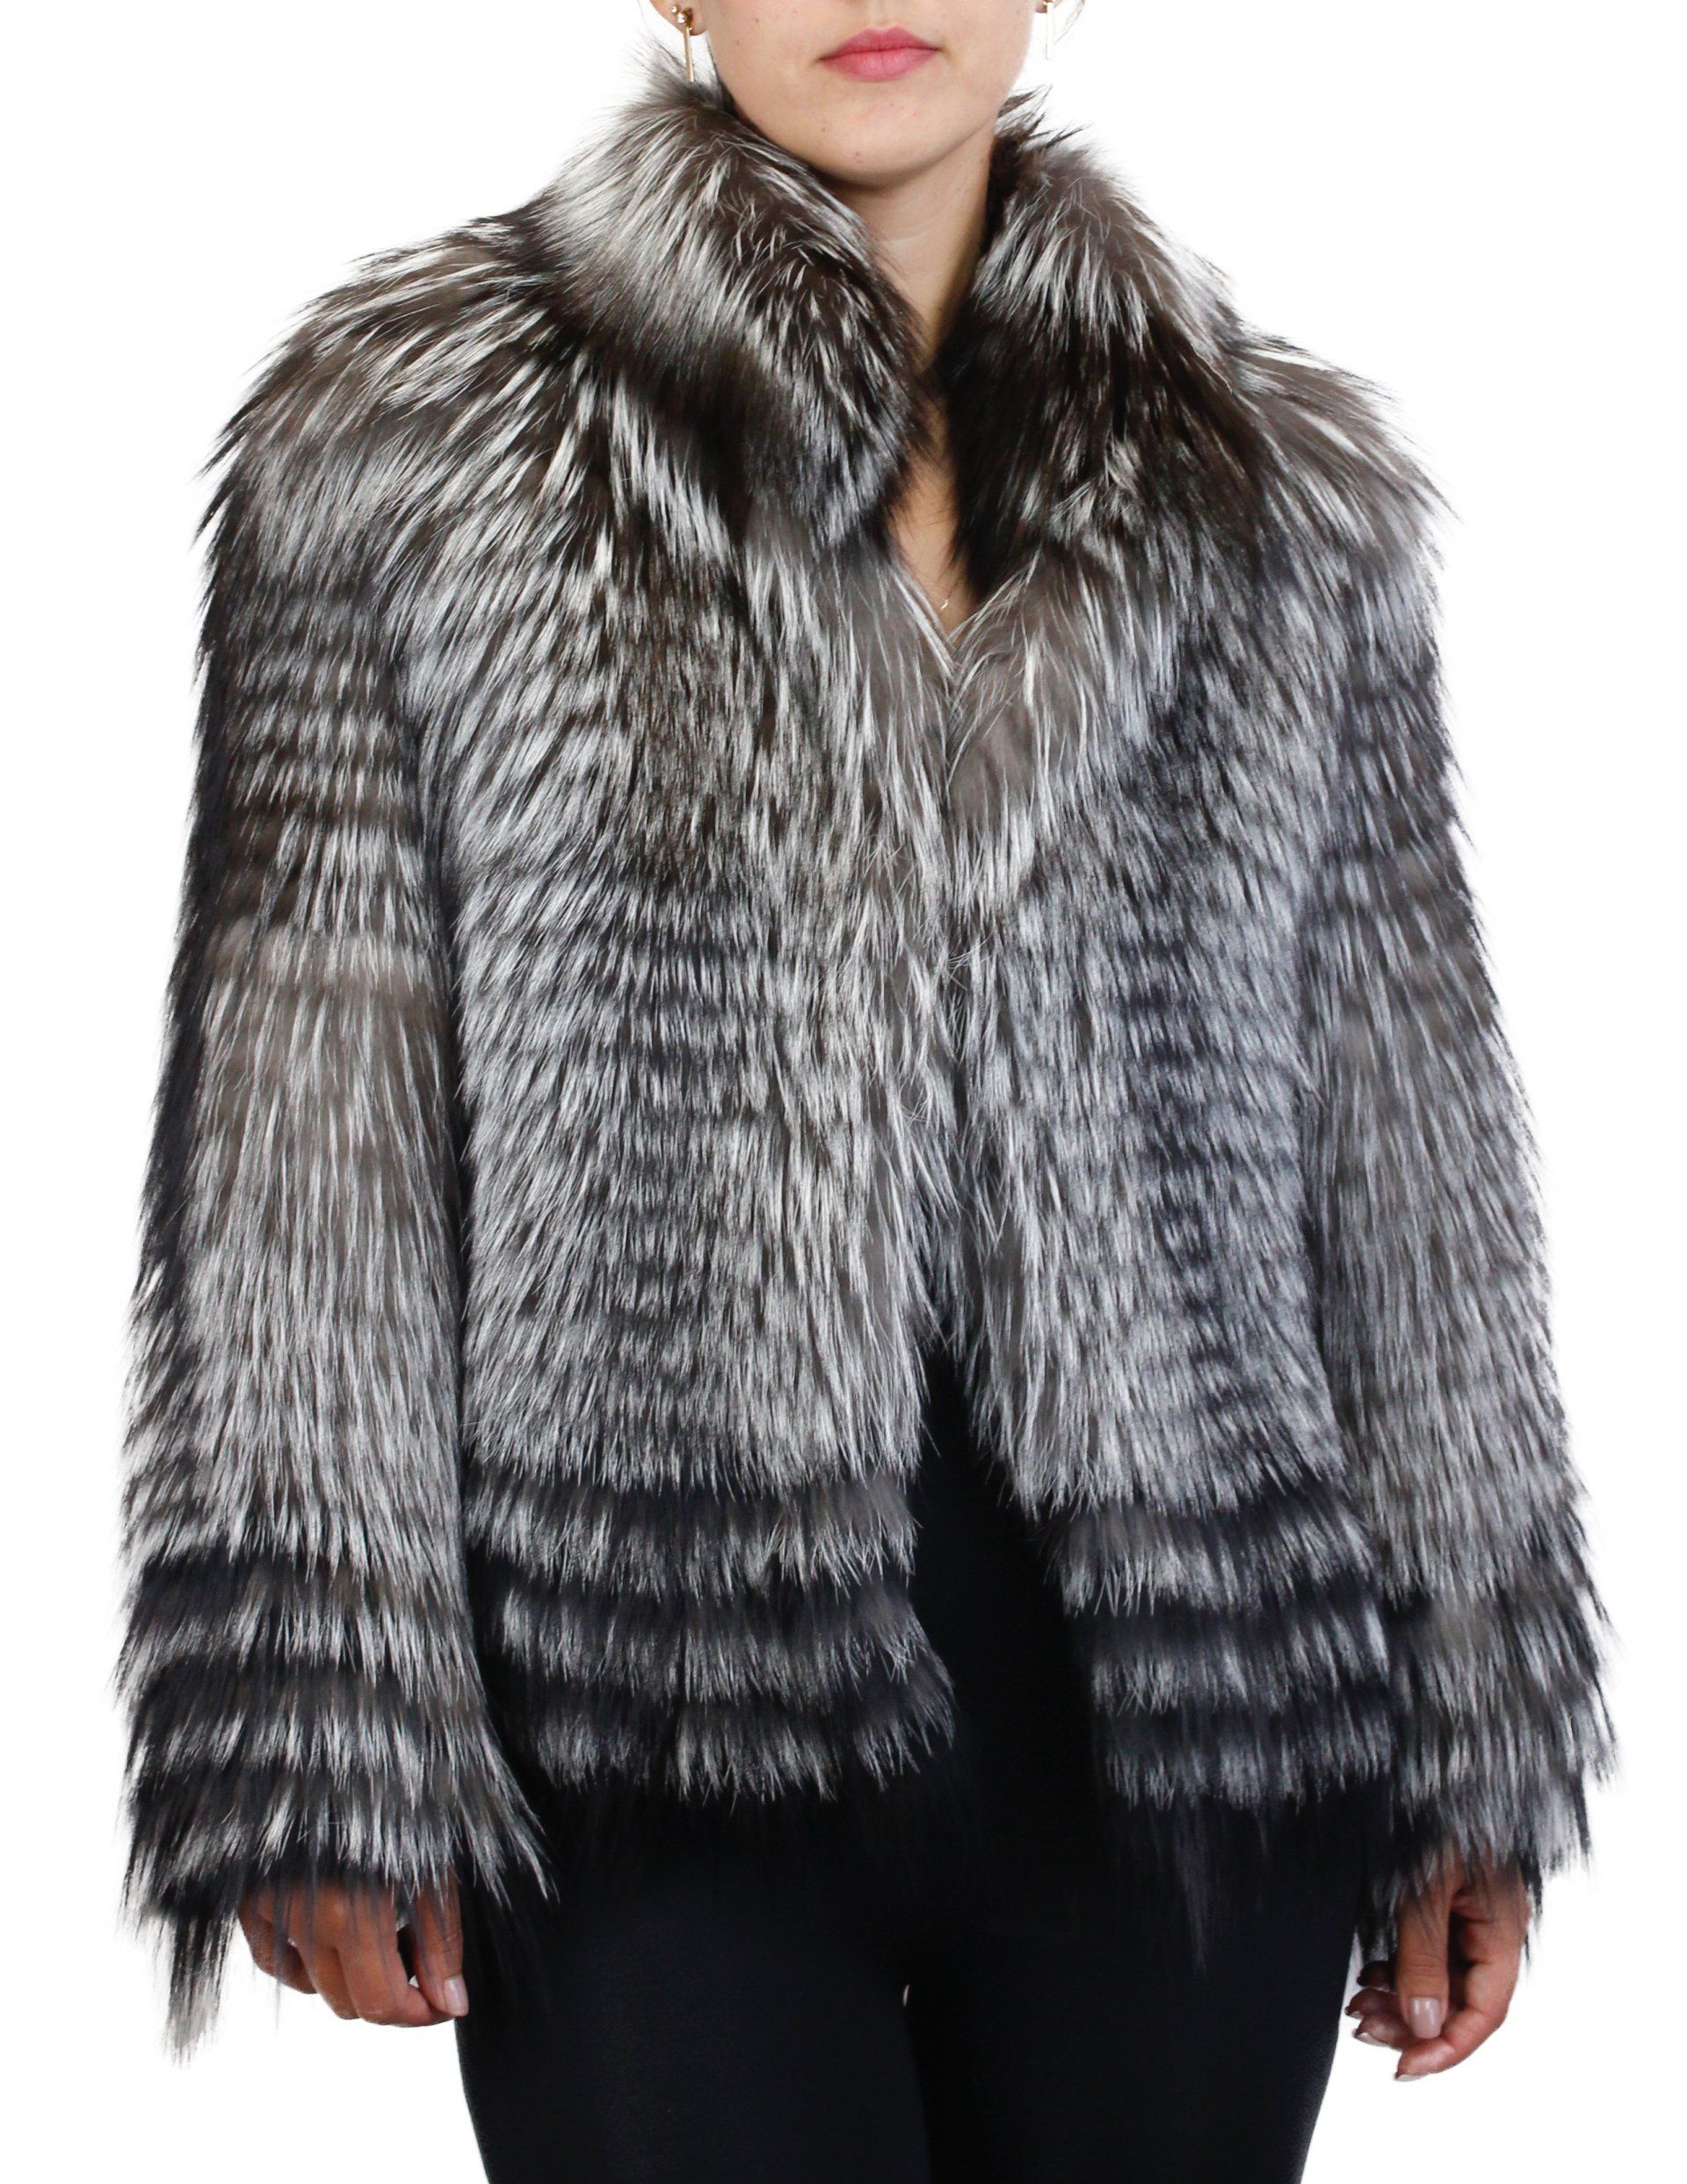 David Appel Furs Beverly Hills, Furrier, Fur Catalogs